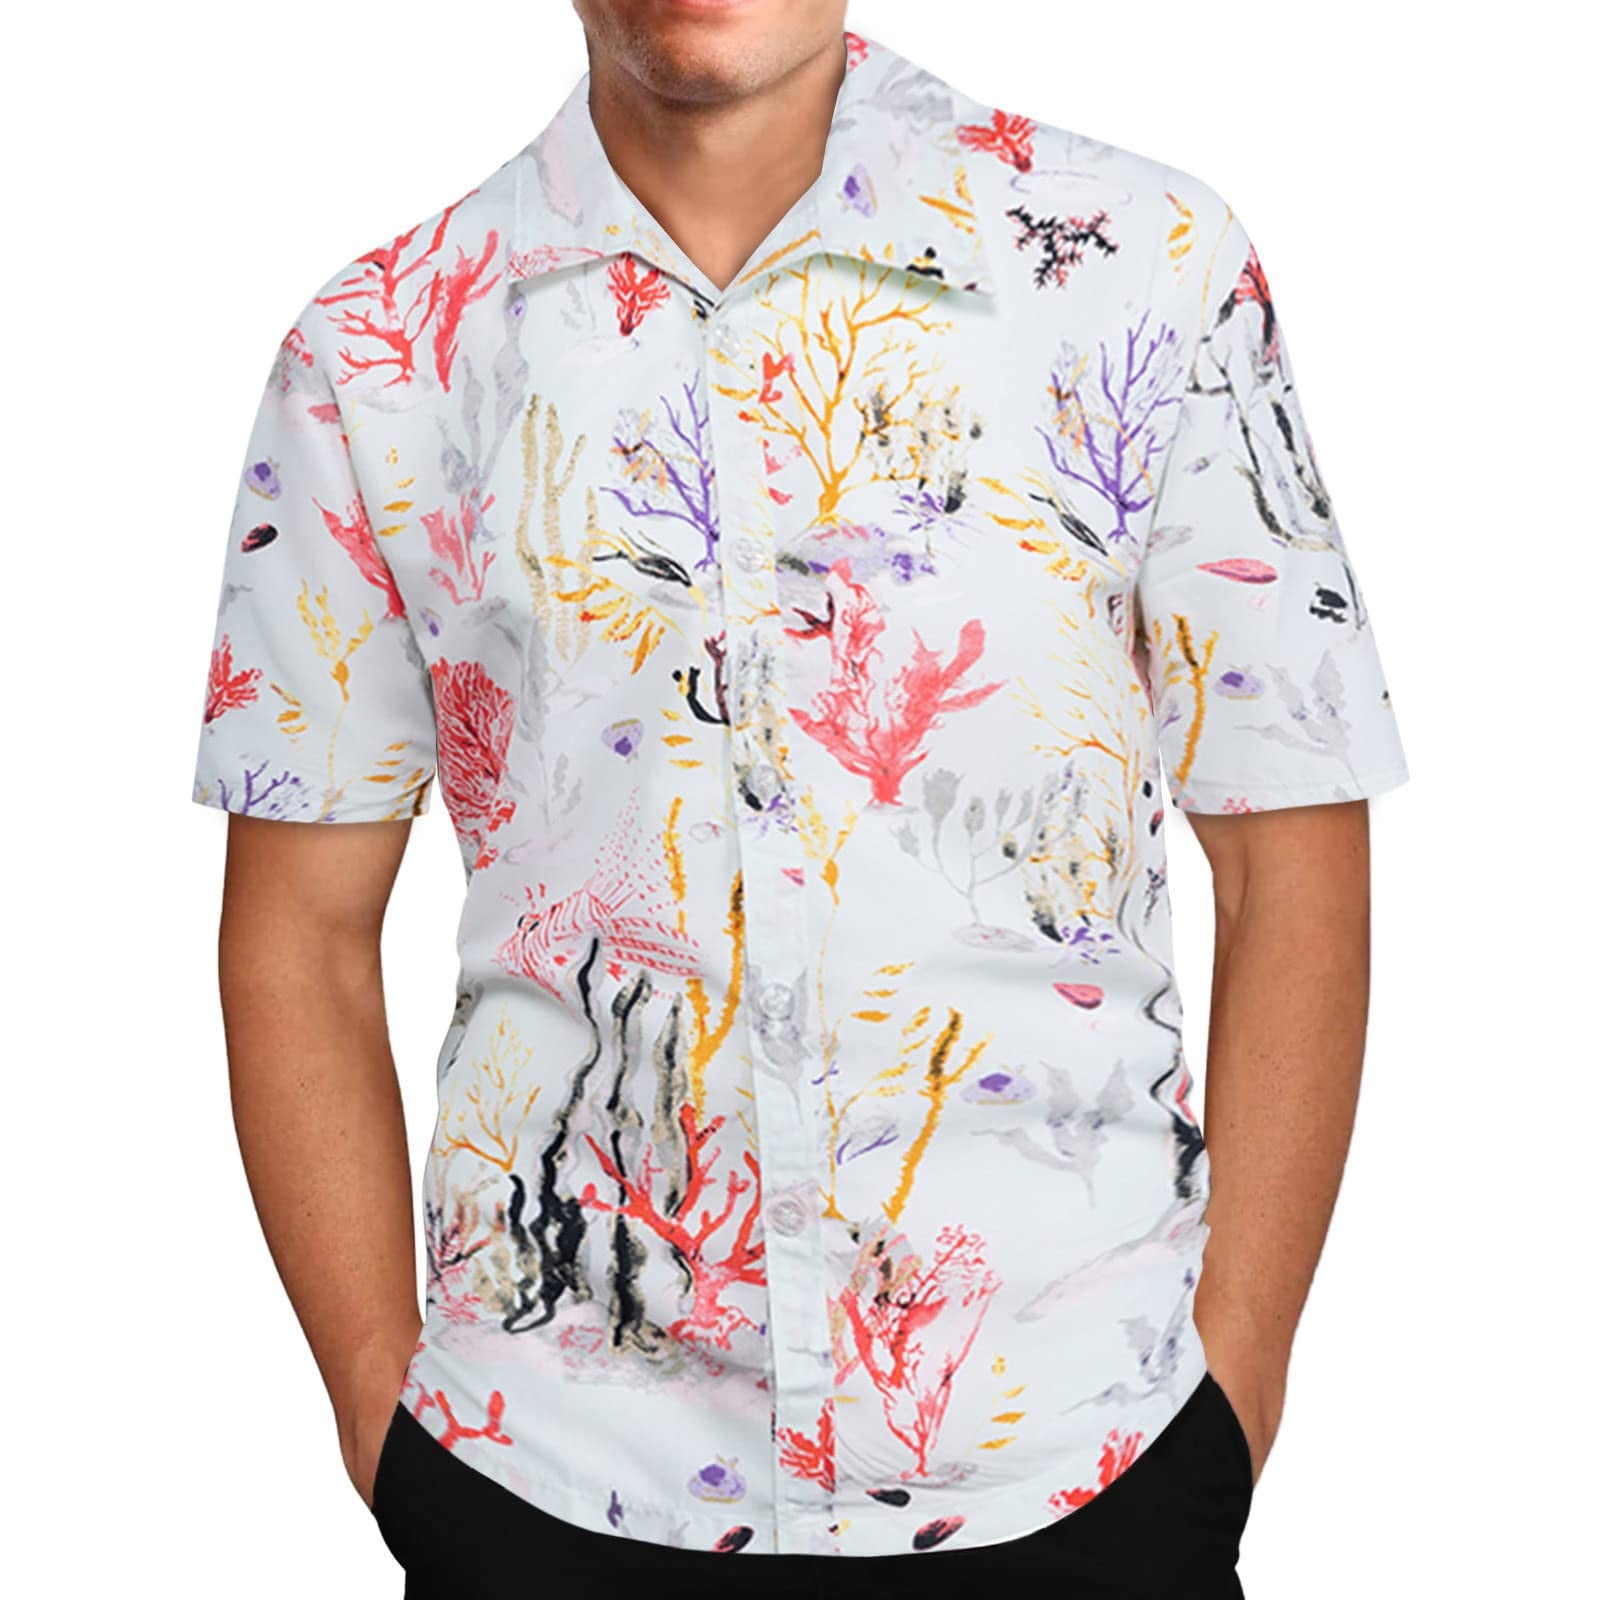 VSSSJ Casual Hawaiian Shirt for Men Short Sleeve Quick Dry Cruise